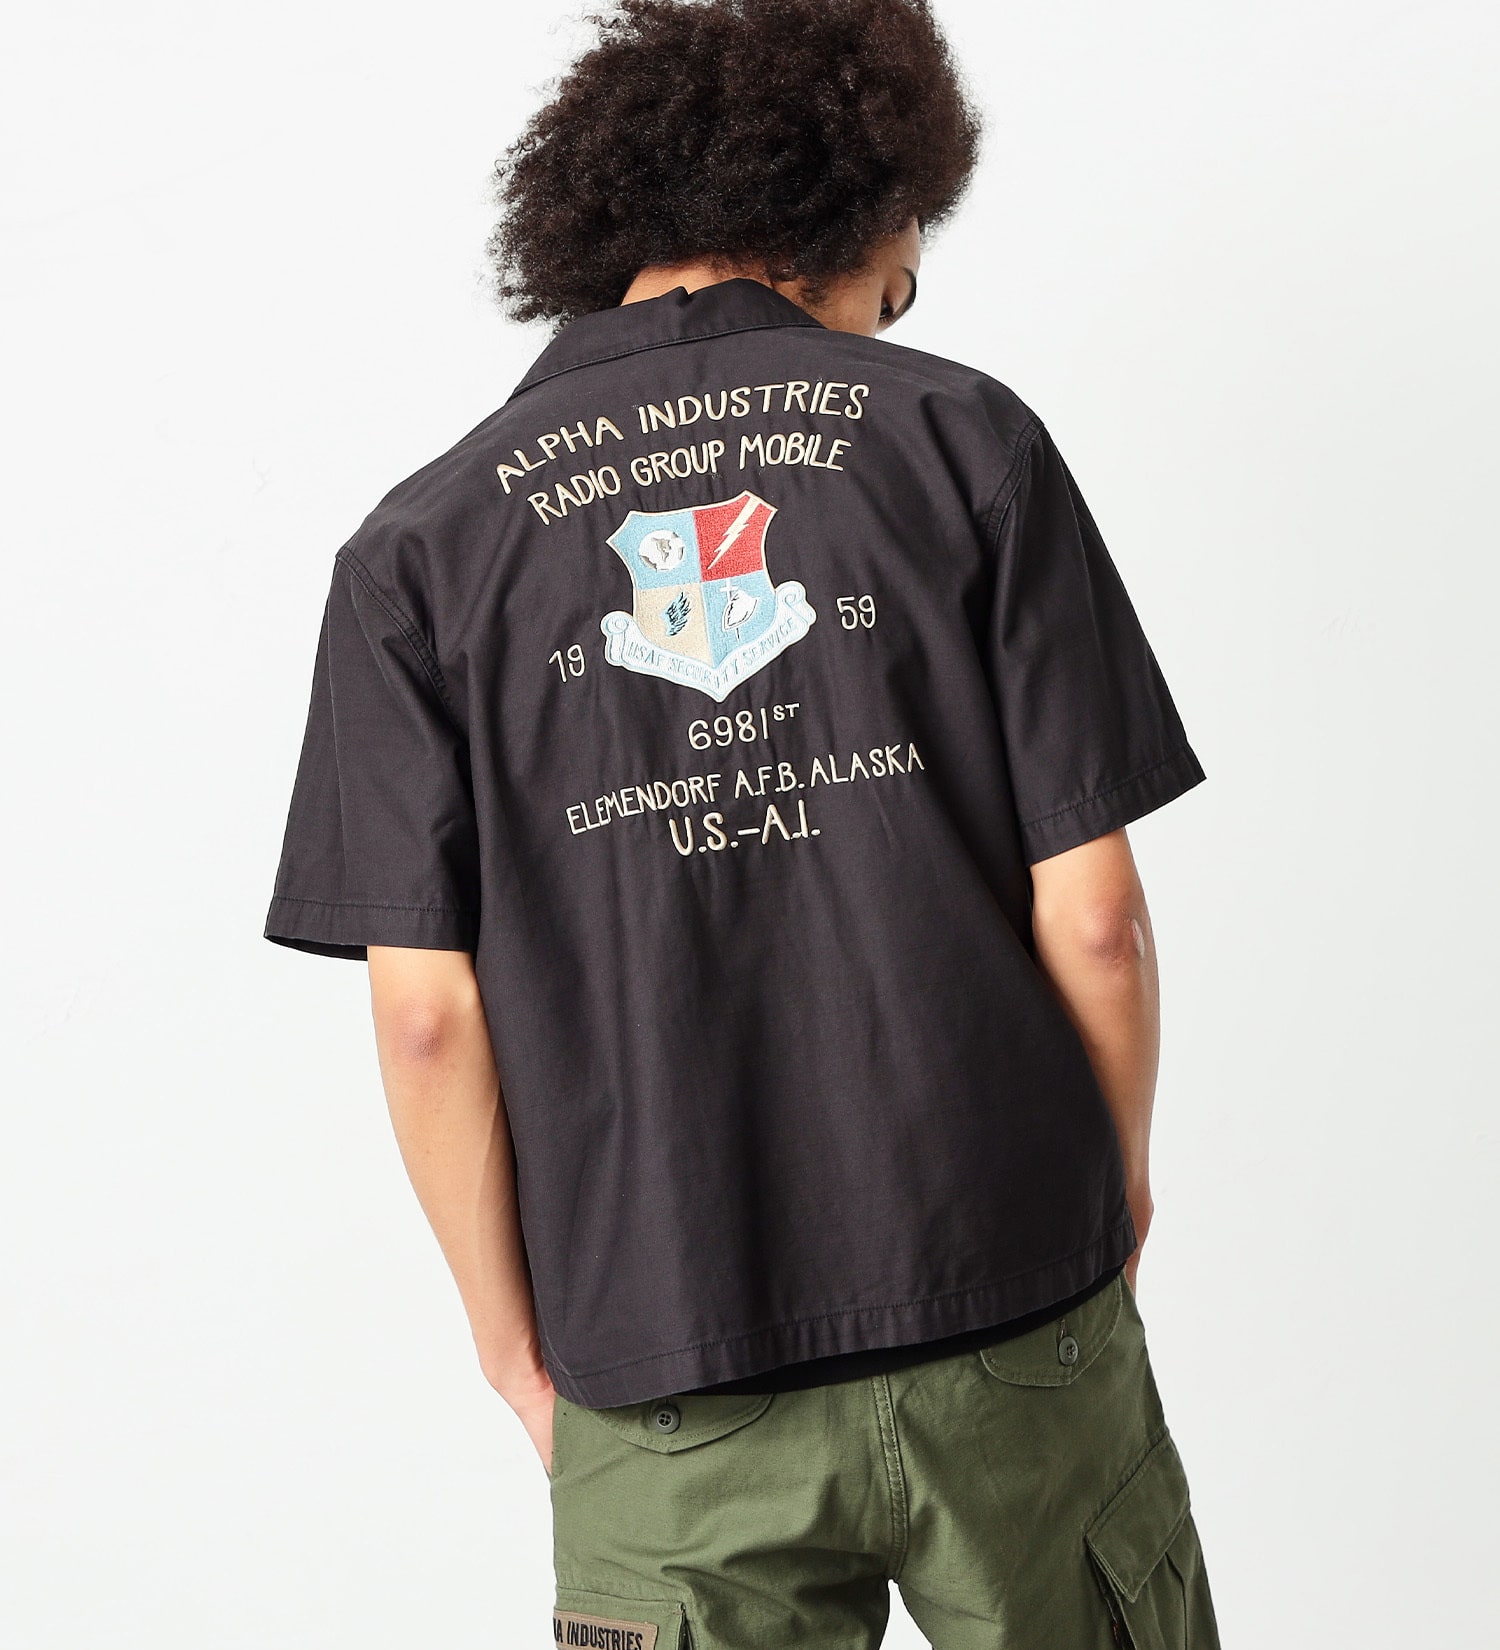 ALPHA(アルファ)の【試着対象】スーベニアバック刺繍 半袖ミリタリーシャツ|トップス/シャツ/ブラウス/メンズ|ブラック